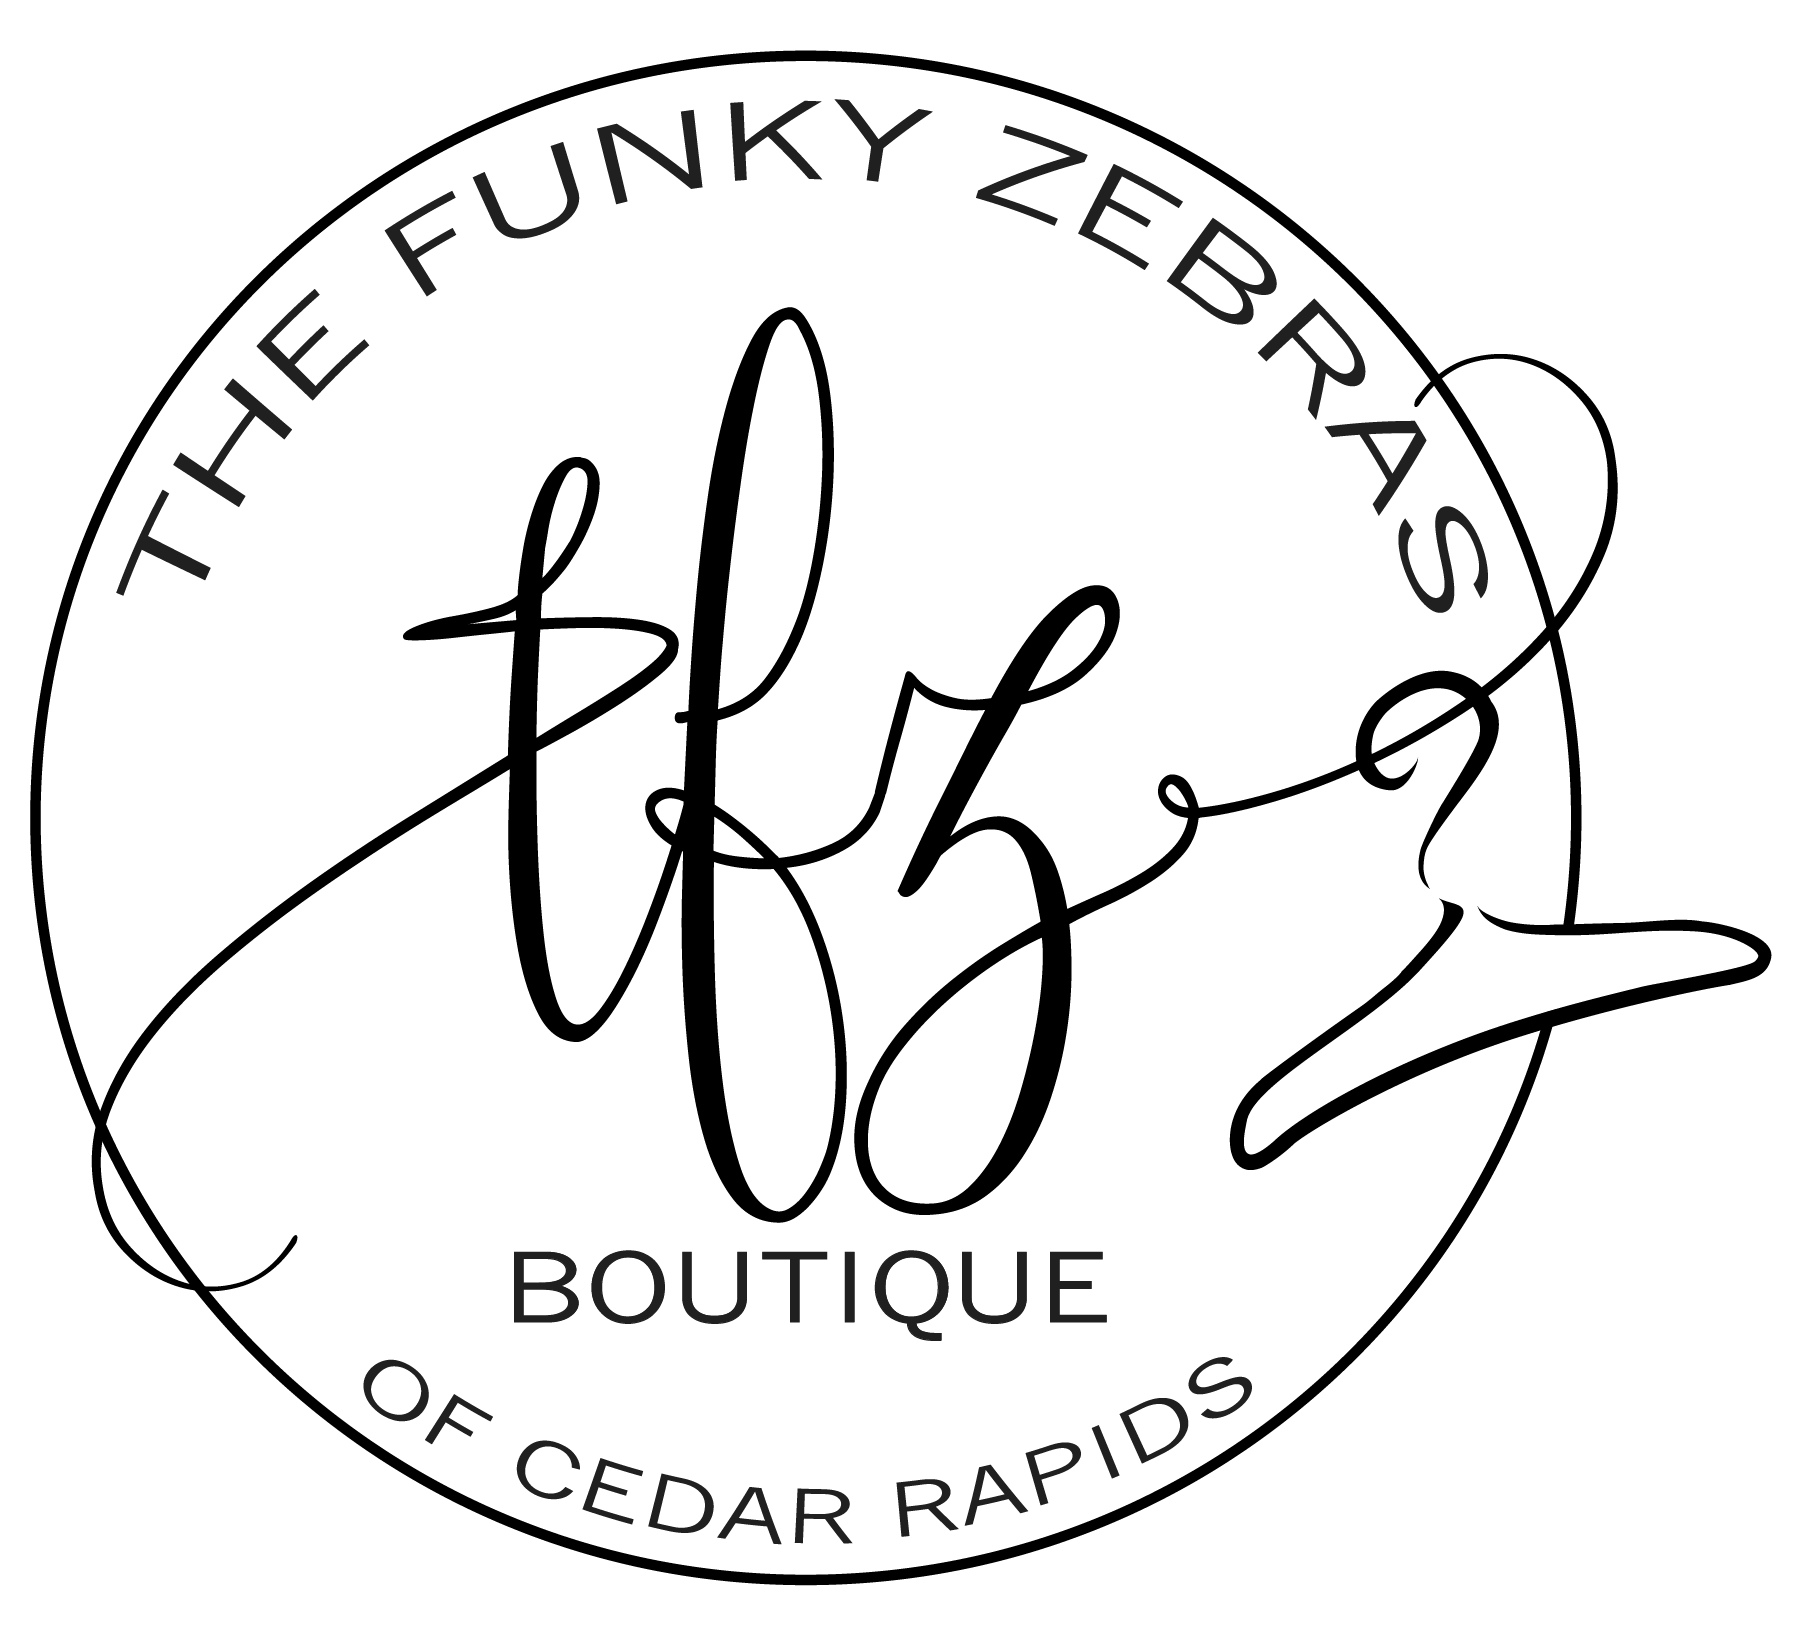 The Funky Zebras Cedar Rapids logo